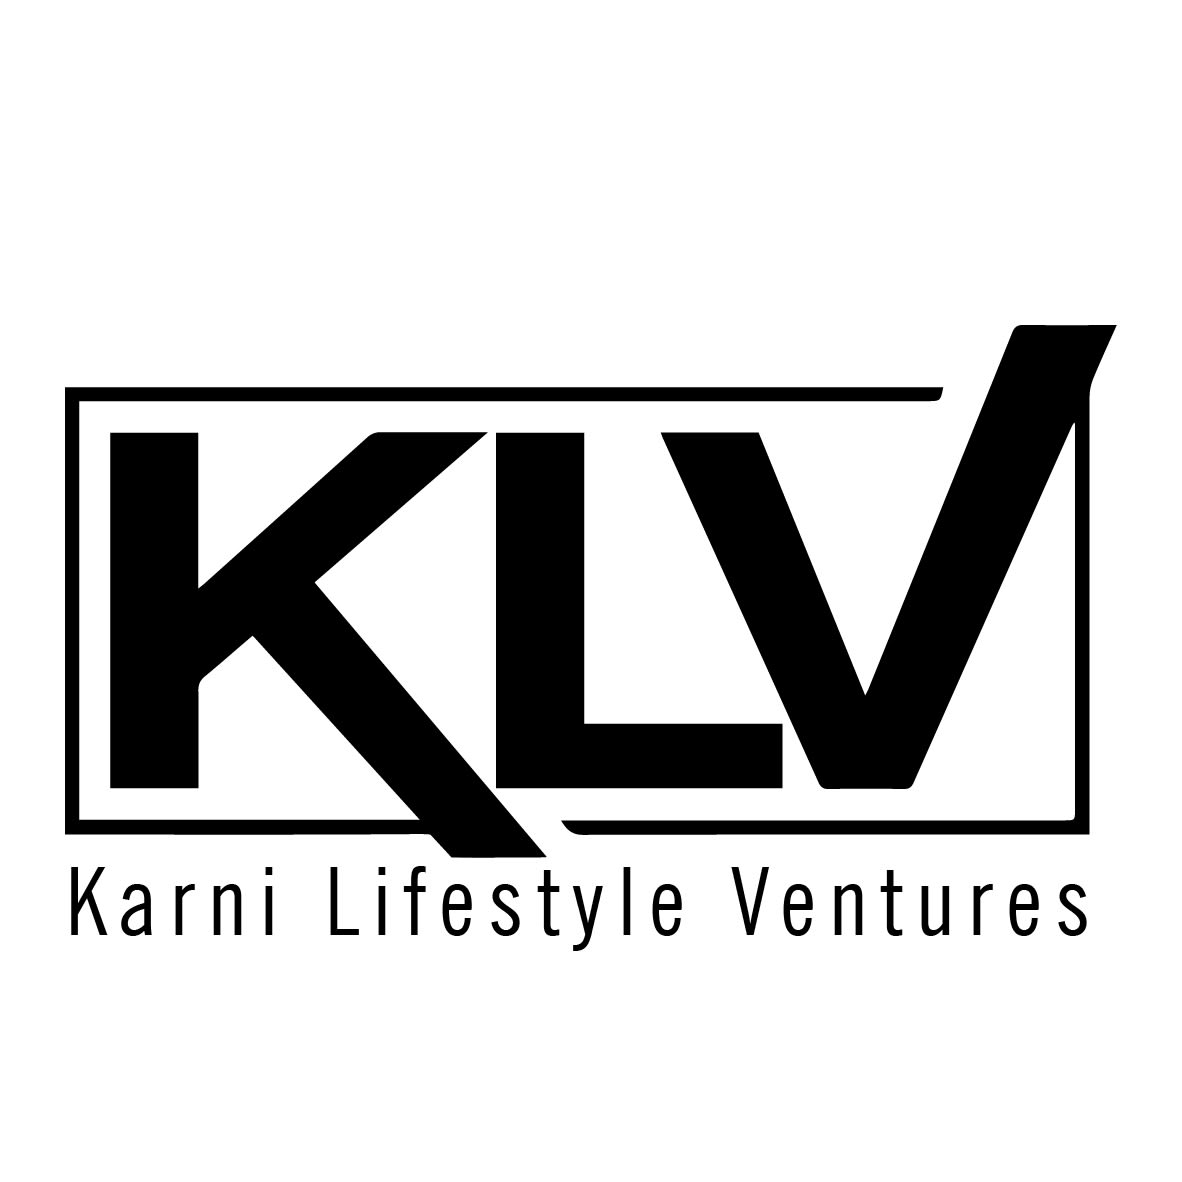 Karni Lifestyle Ventures